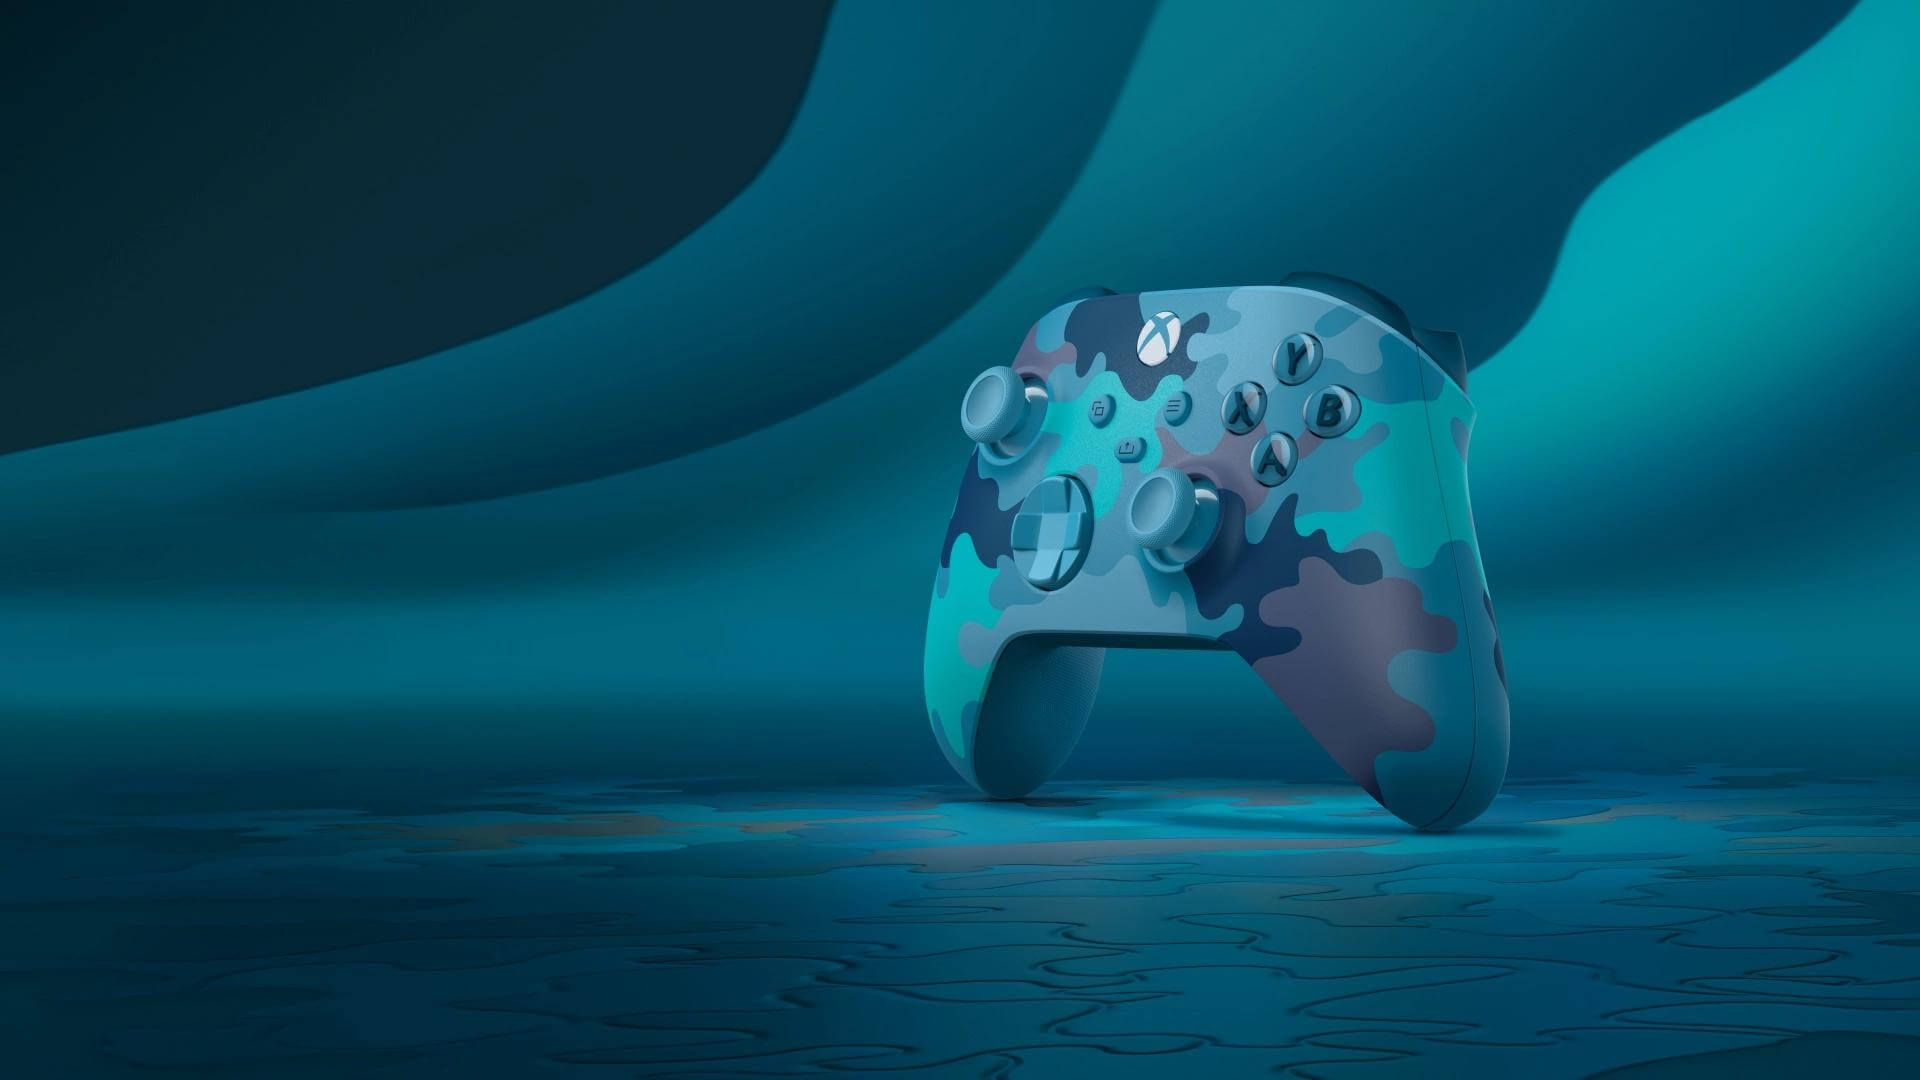 Microsoft официально представила новый геймпад - Mineral Camo Special Edition Controller